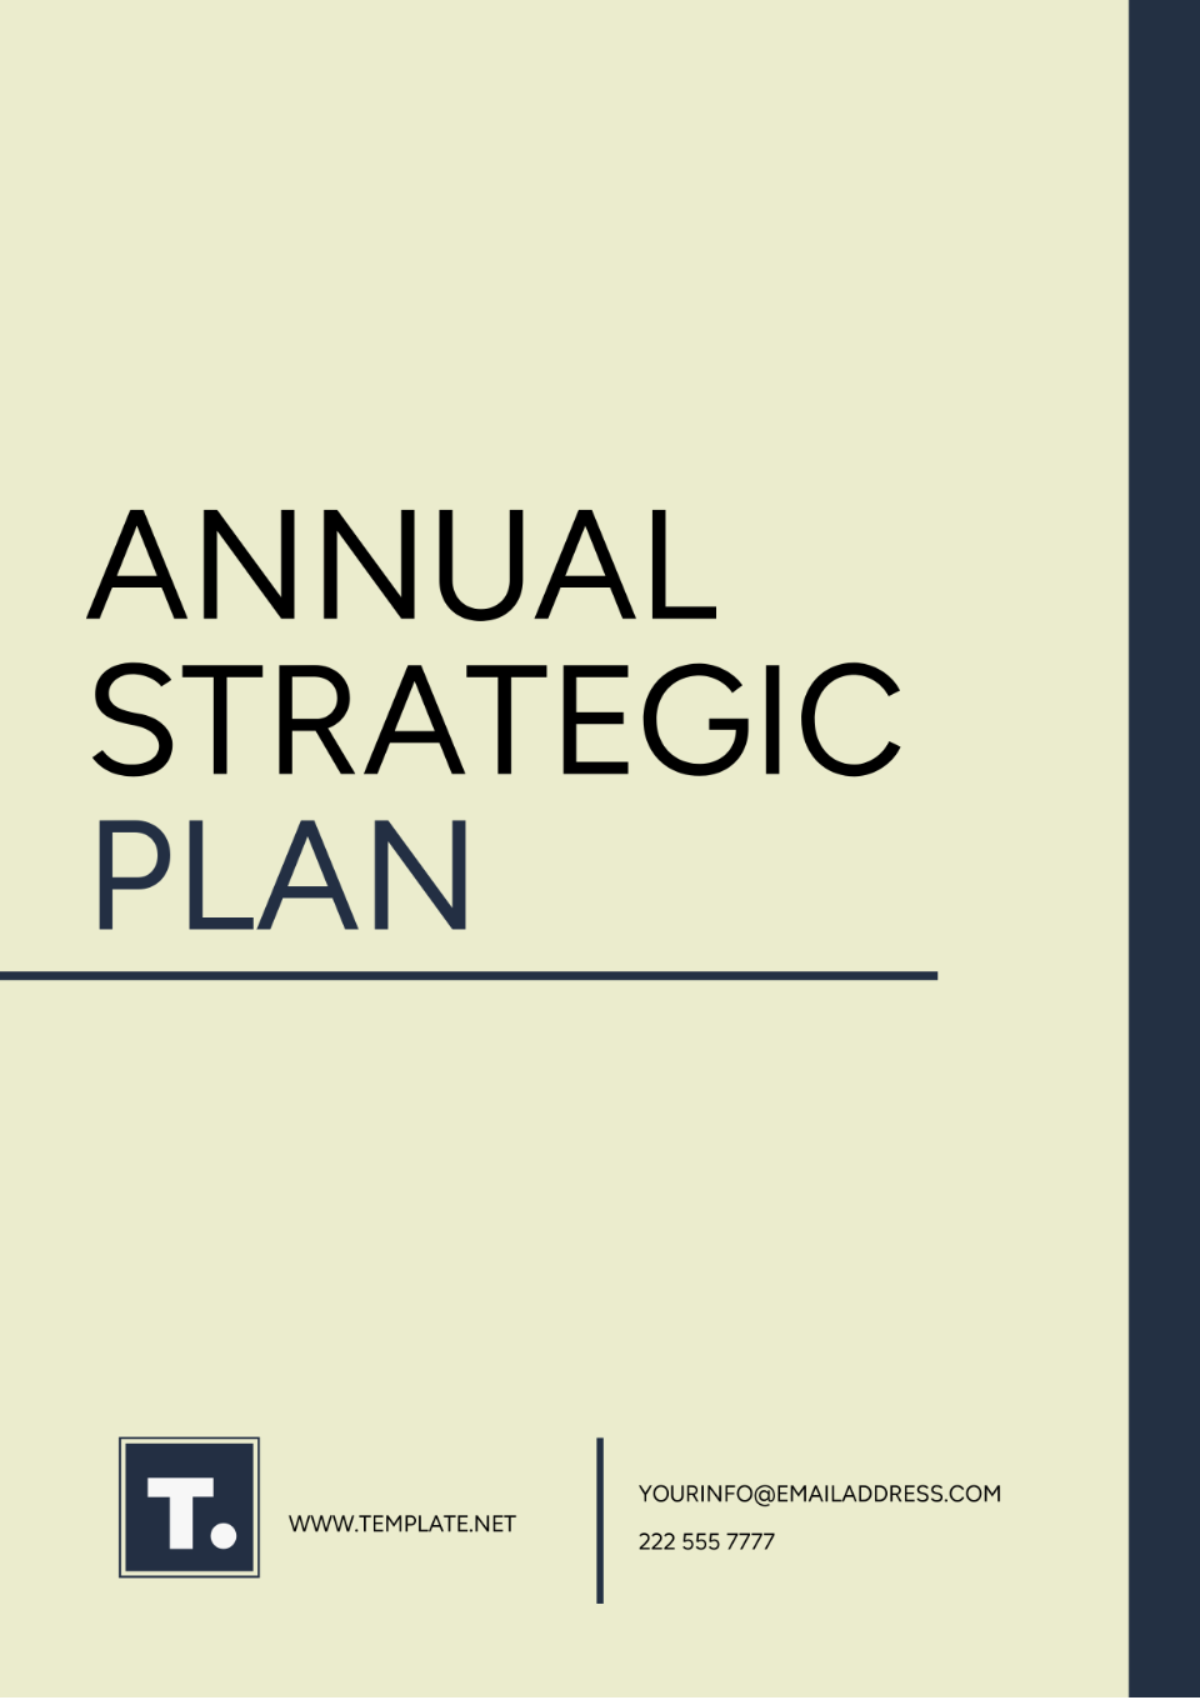 Free Annual Strategic Plan Template